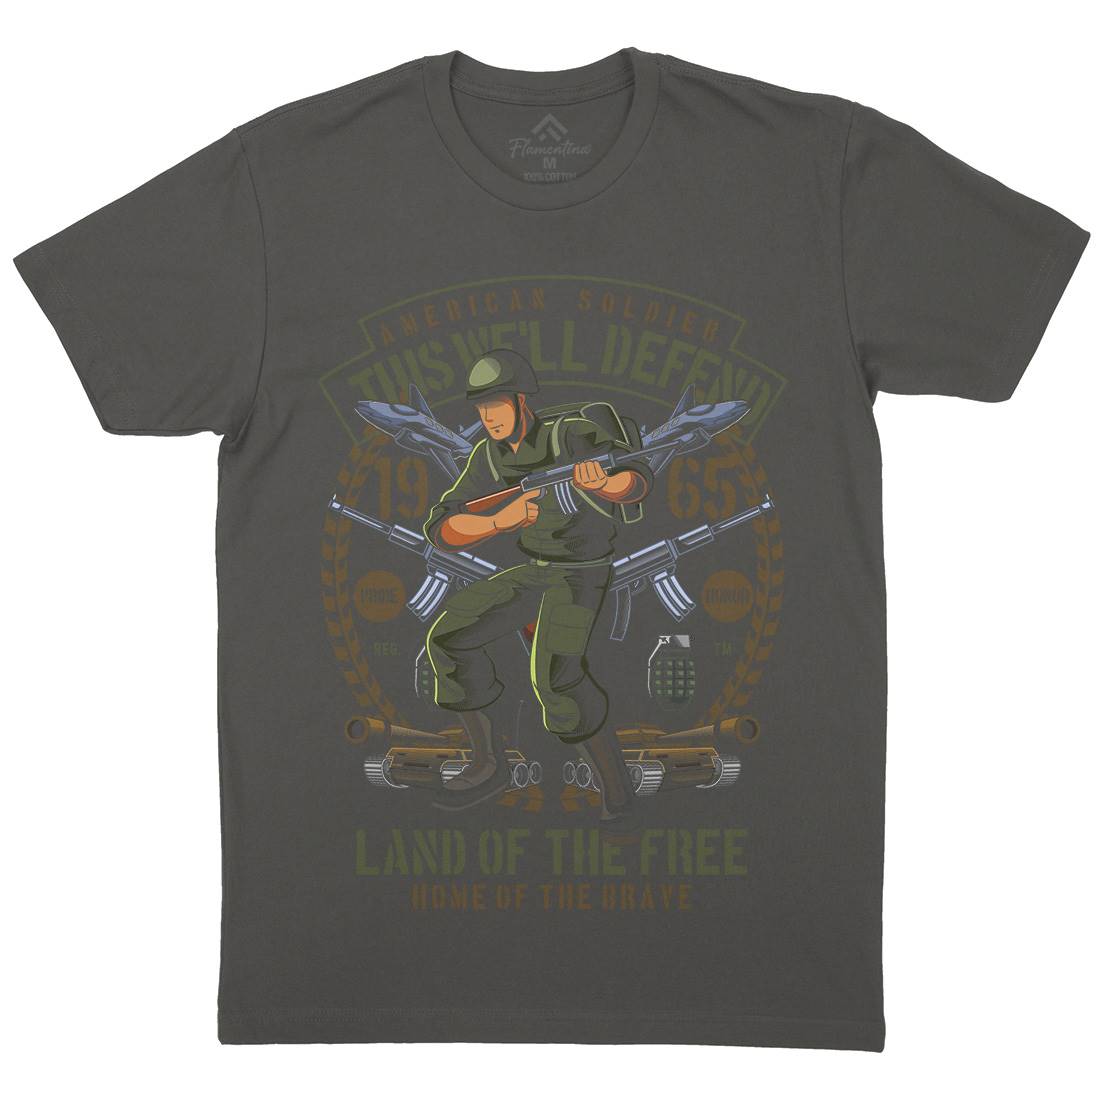 American Soldier Mens Organic Crew Neck T-Shirt Army C304